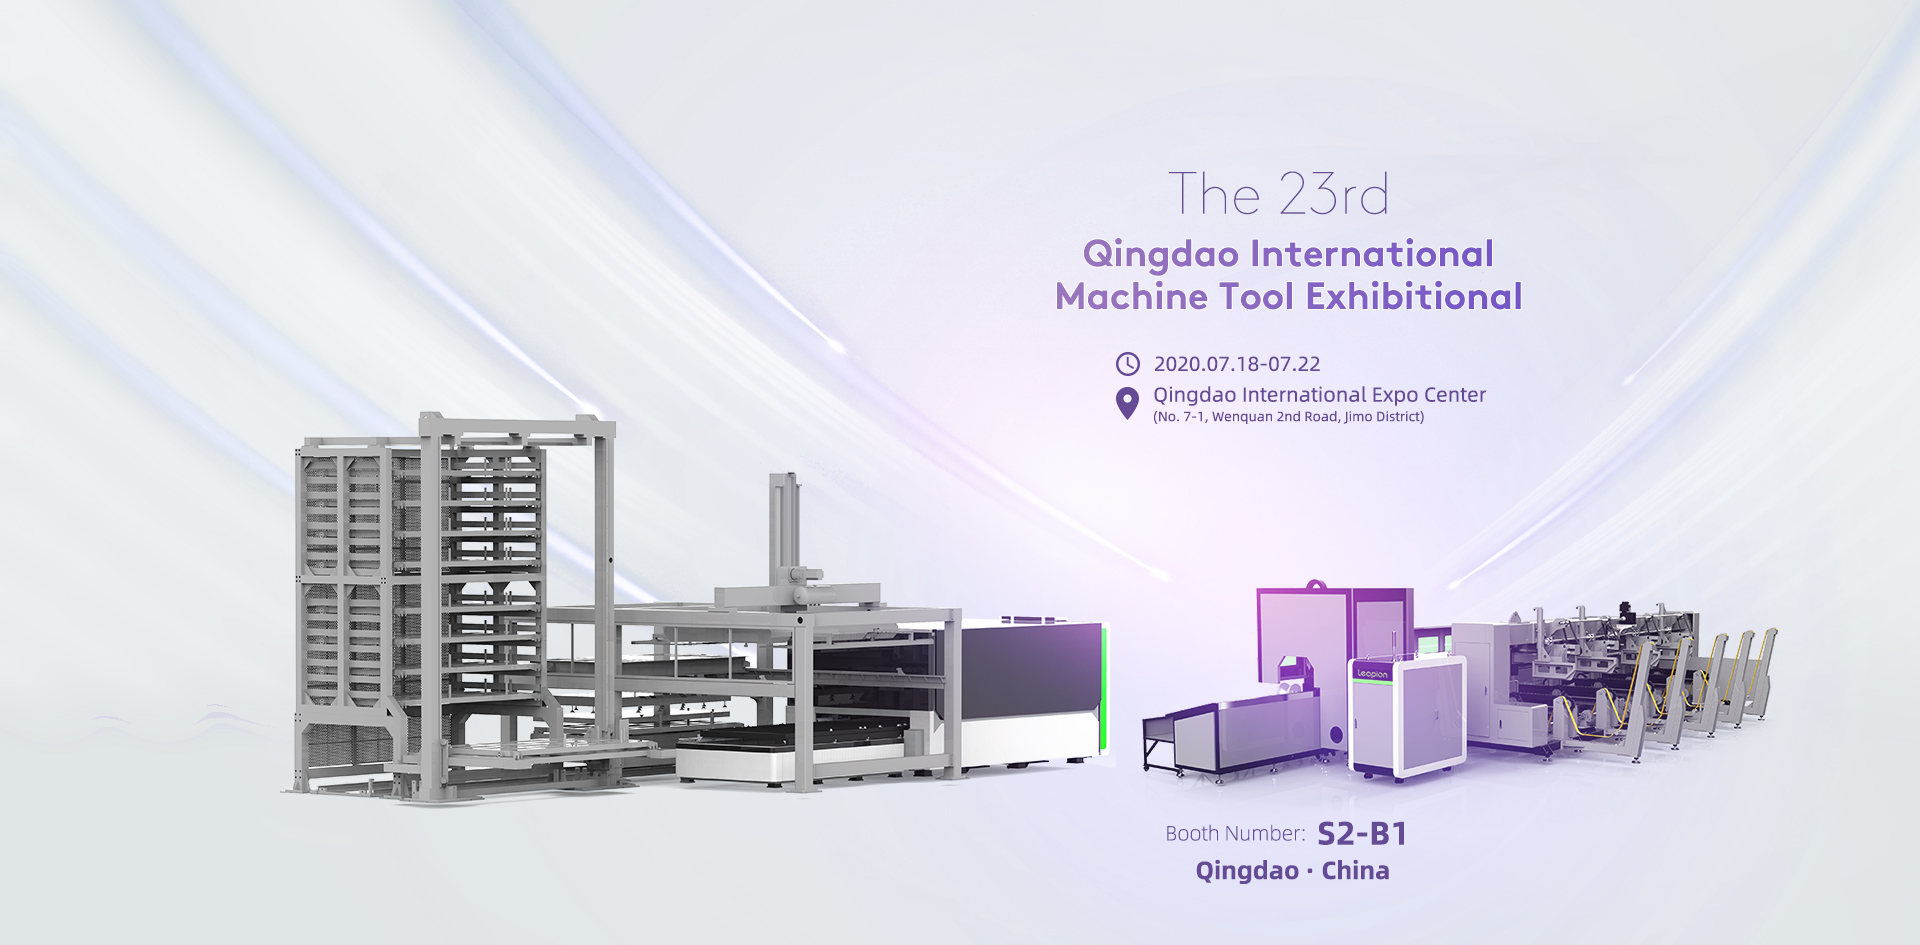 The 23rd Qingdao International Machine Tool Exhibitional